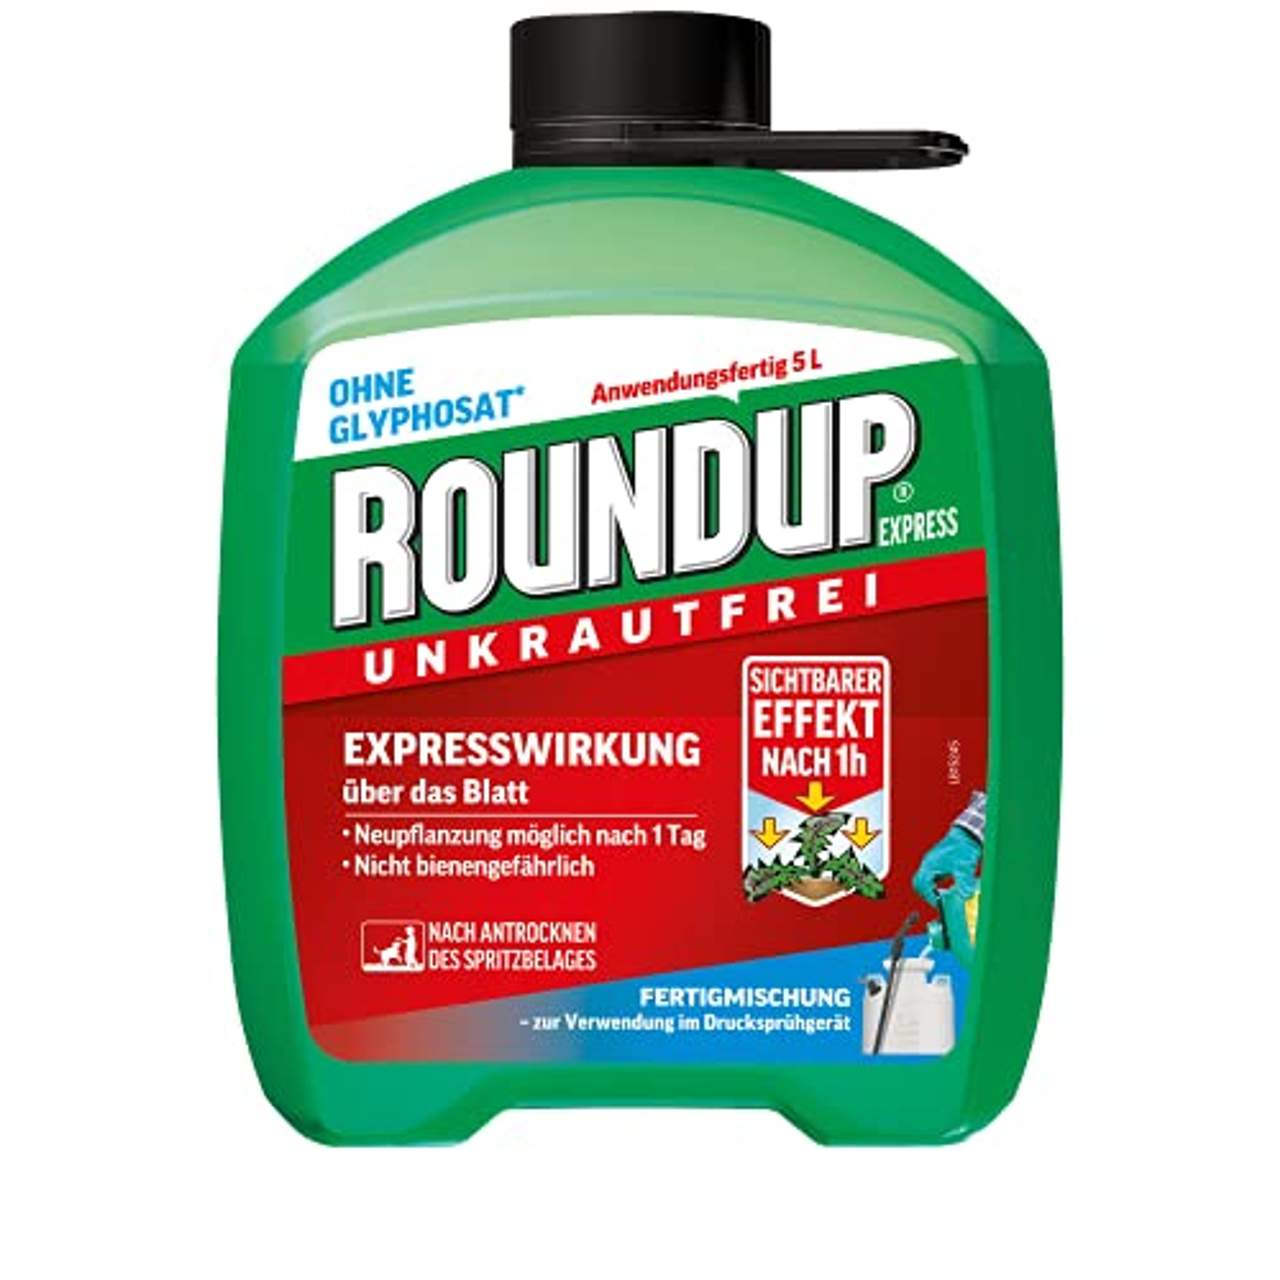 Roundup Express Unkrautfrei Fertigmischung